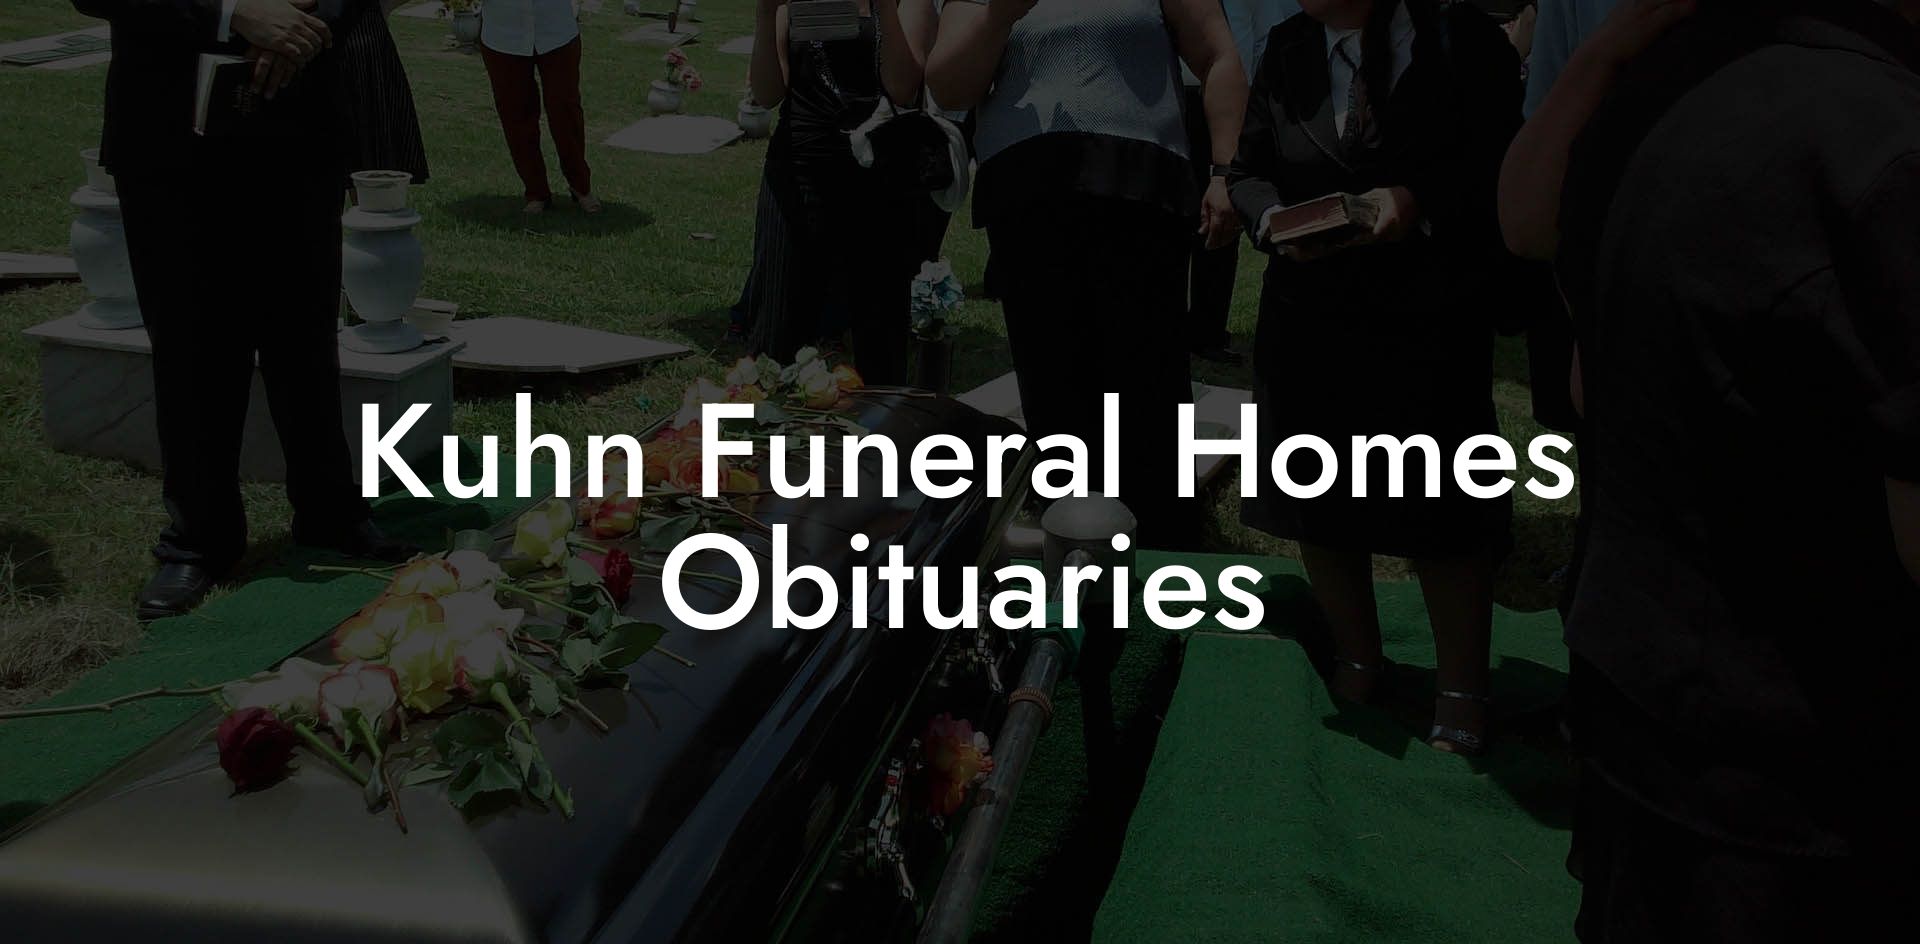 Kuhn Funeral Homes Obituaries